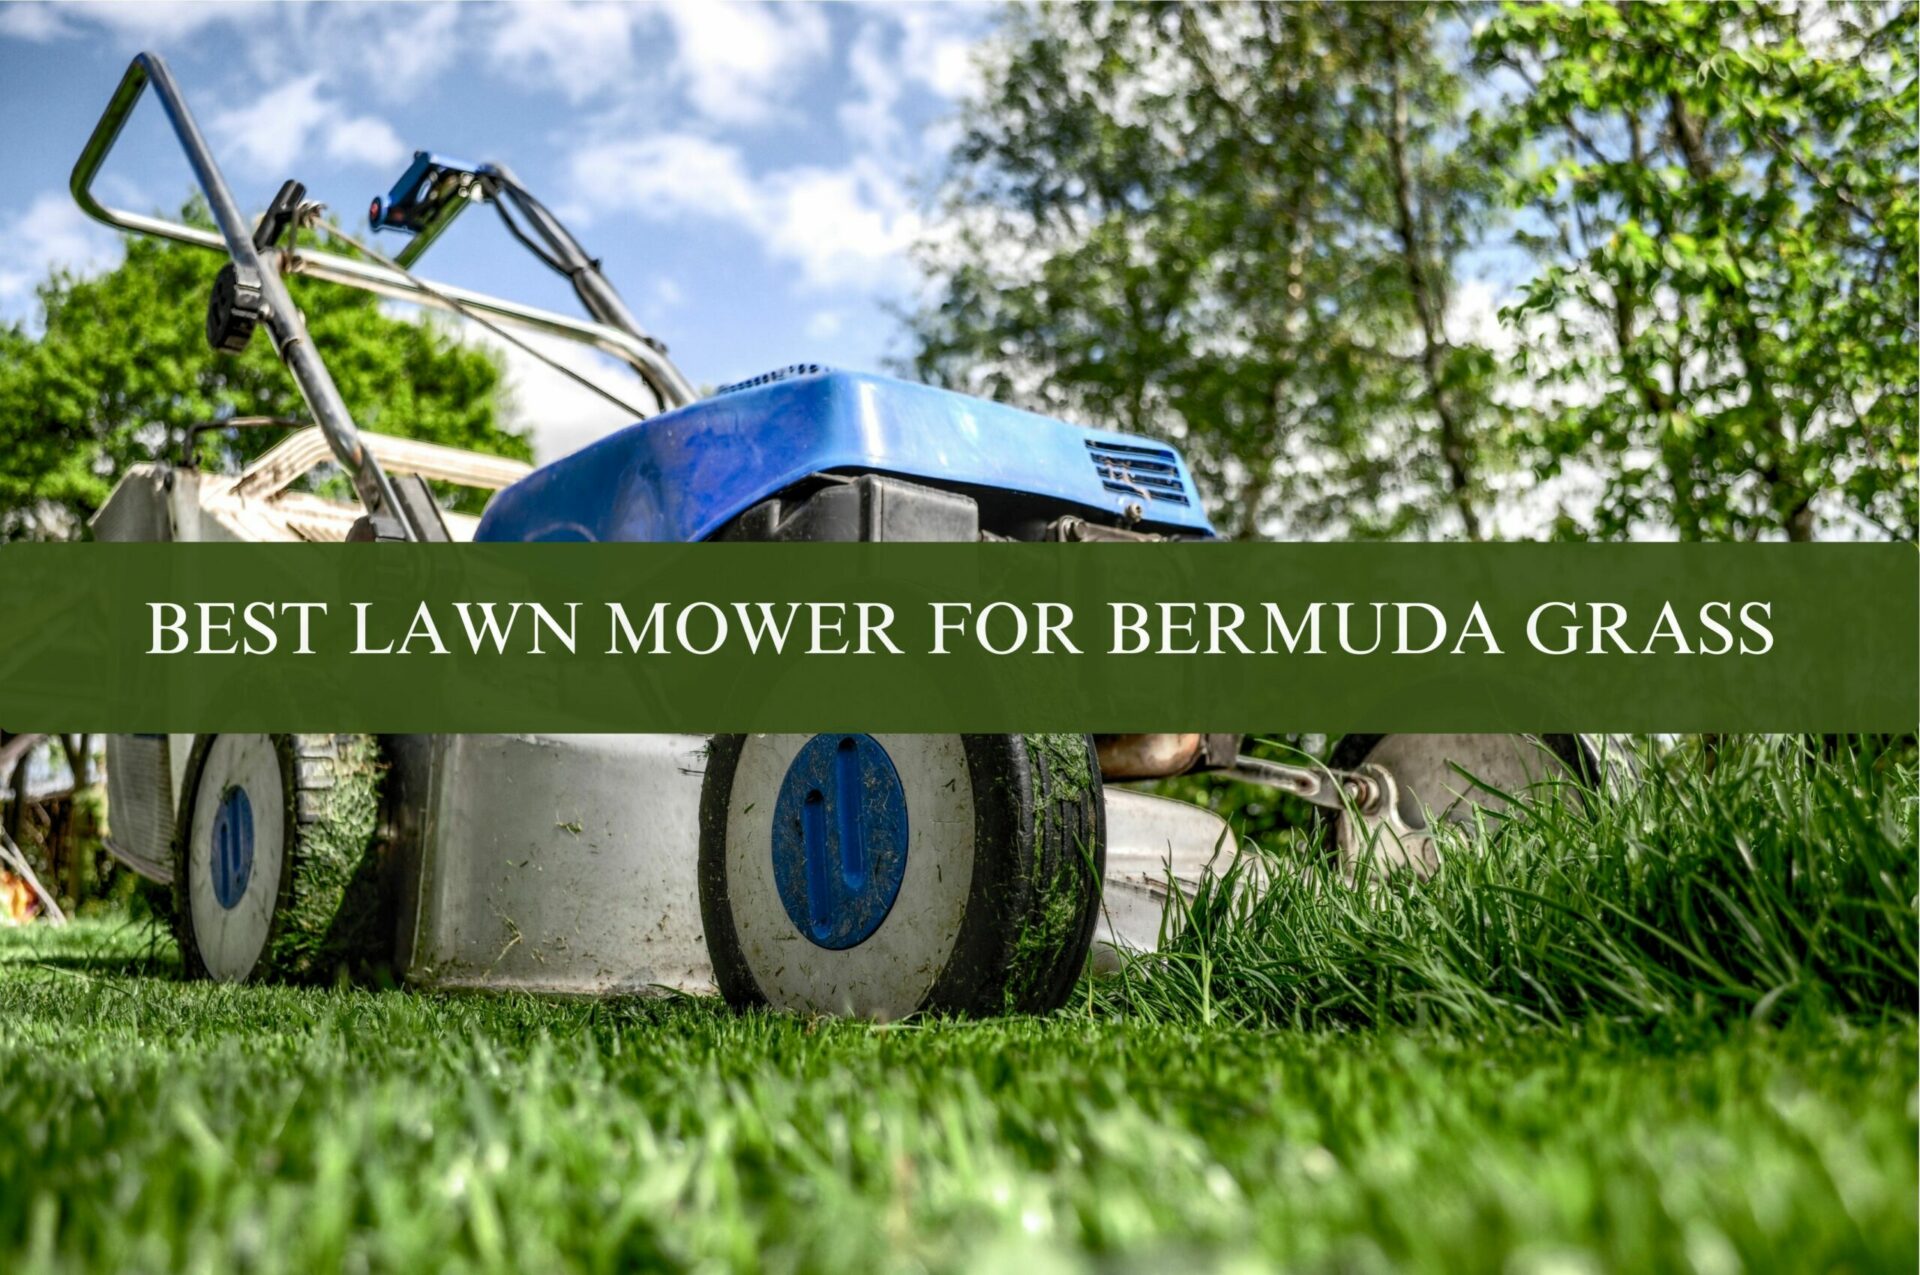 BEST LAWN MOWER FOR BERMUDA GRASS